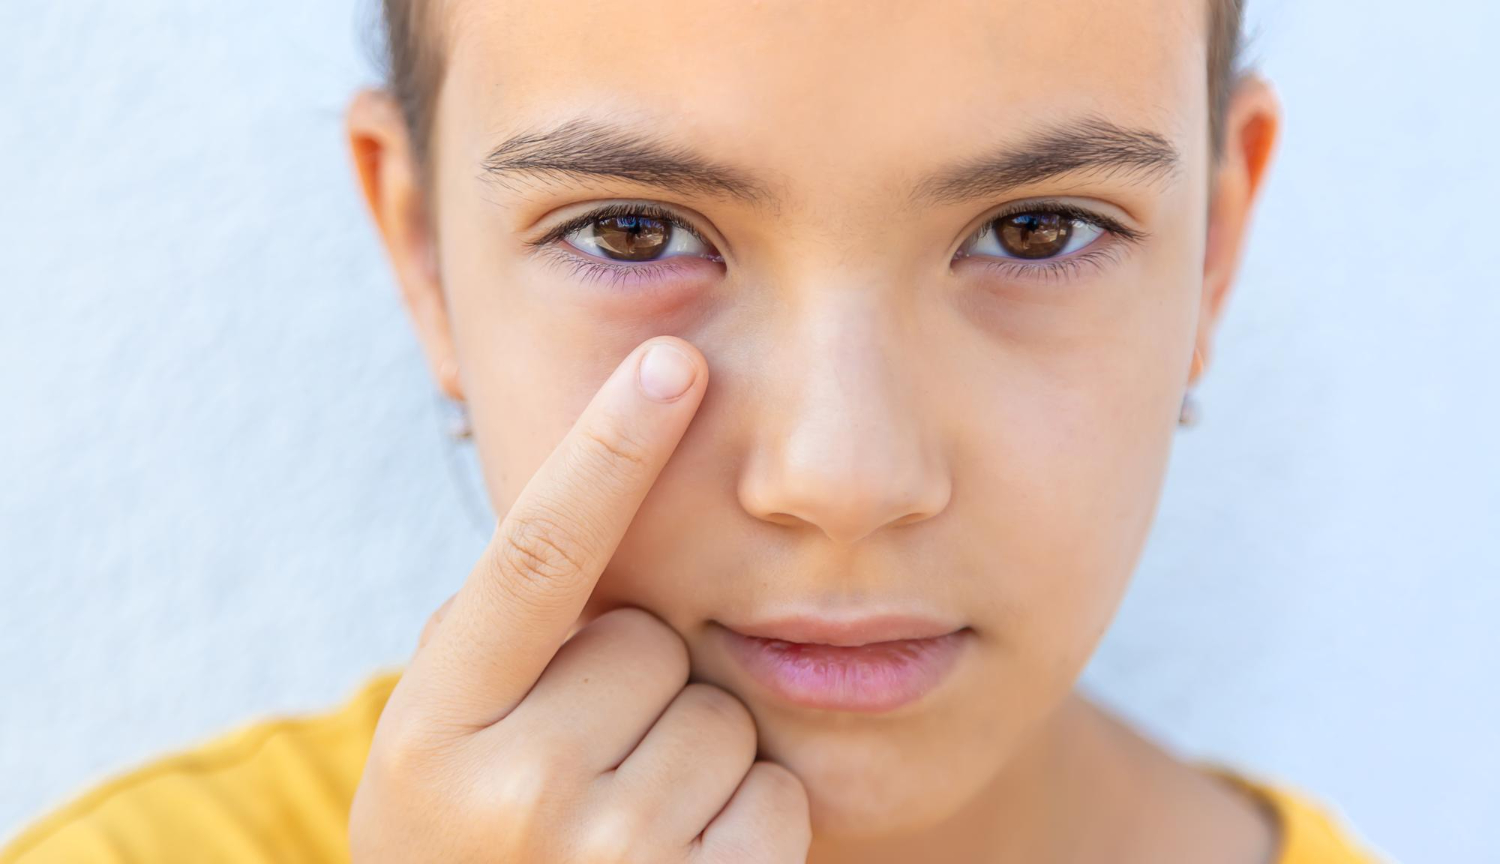 Bug Bite On Eyelid Symptoms And Management 